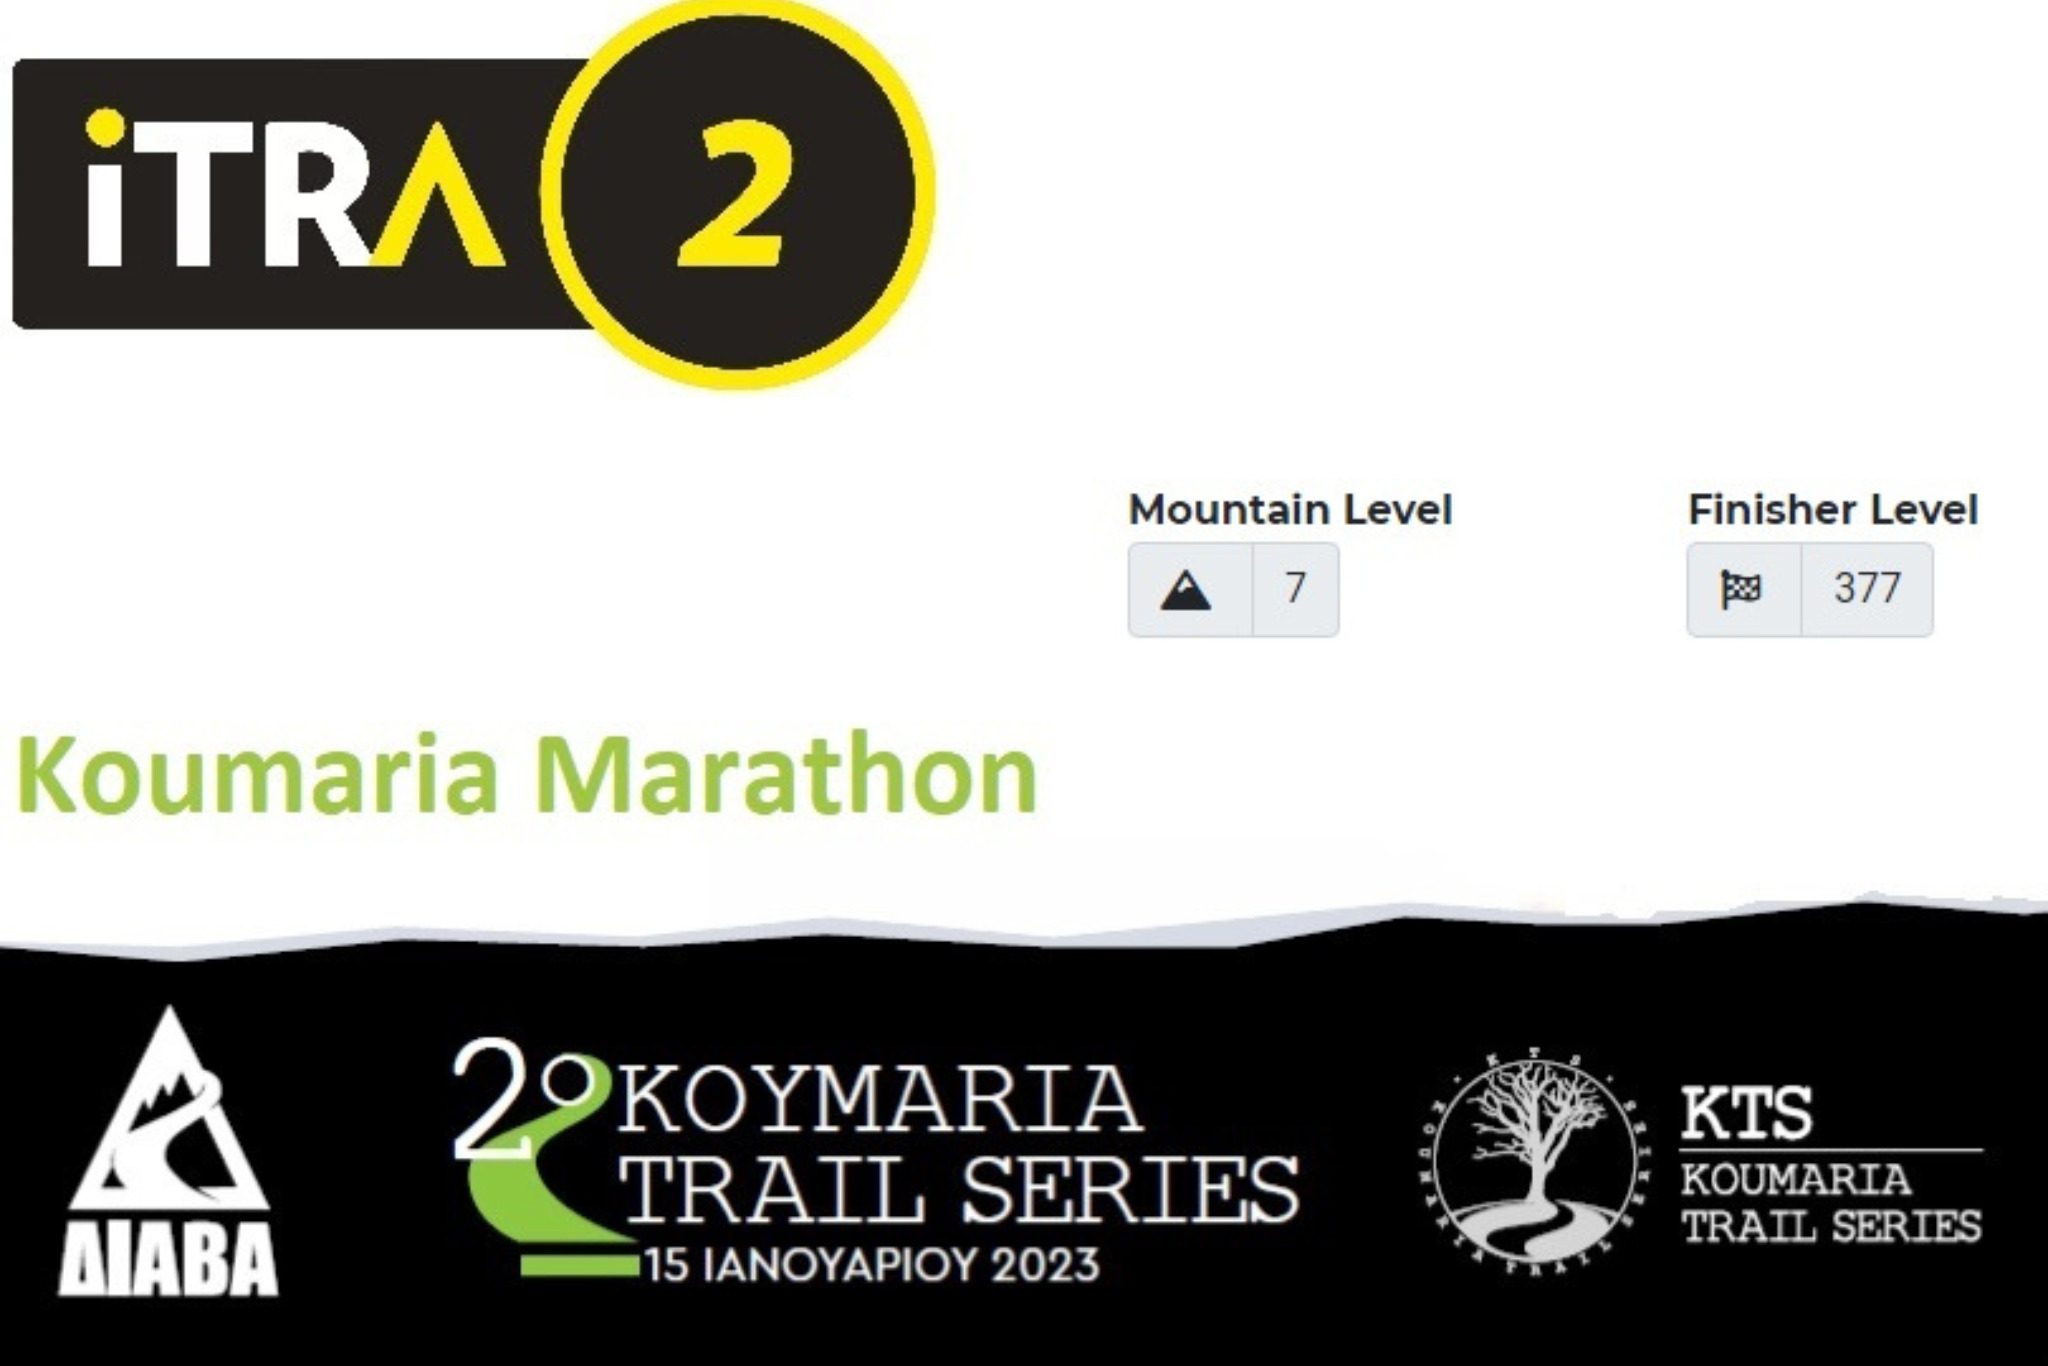 Koumaria Trail Series 2023 – Marathon 40km